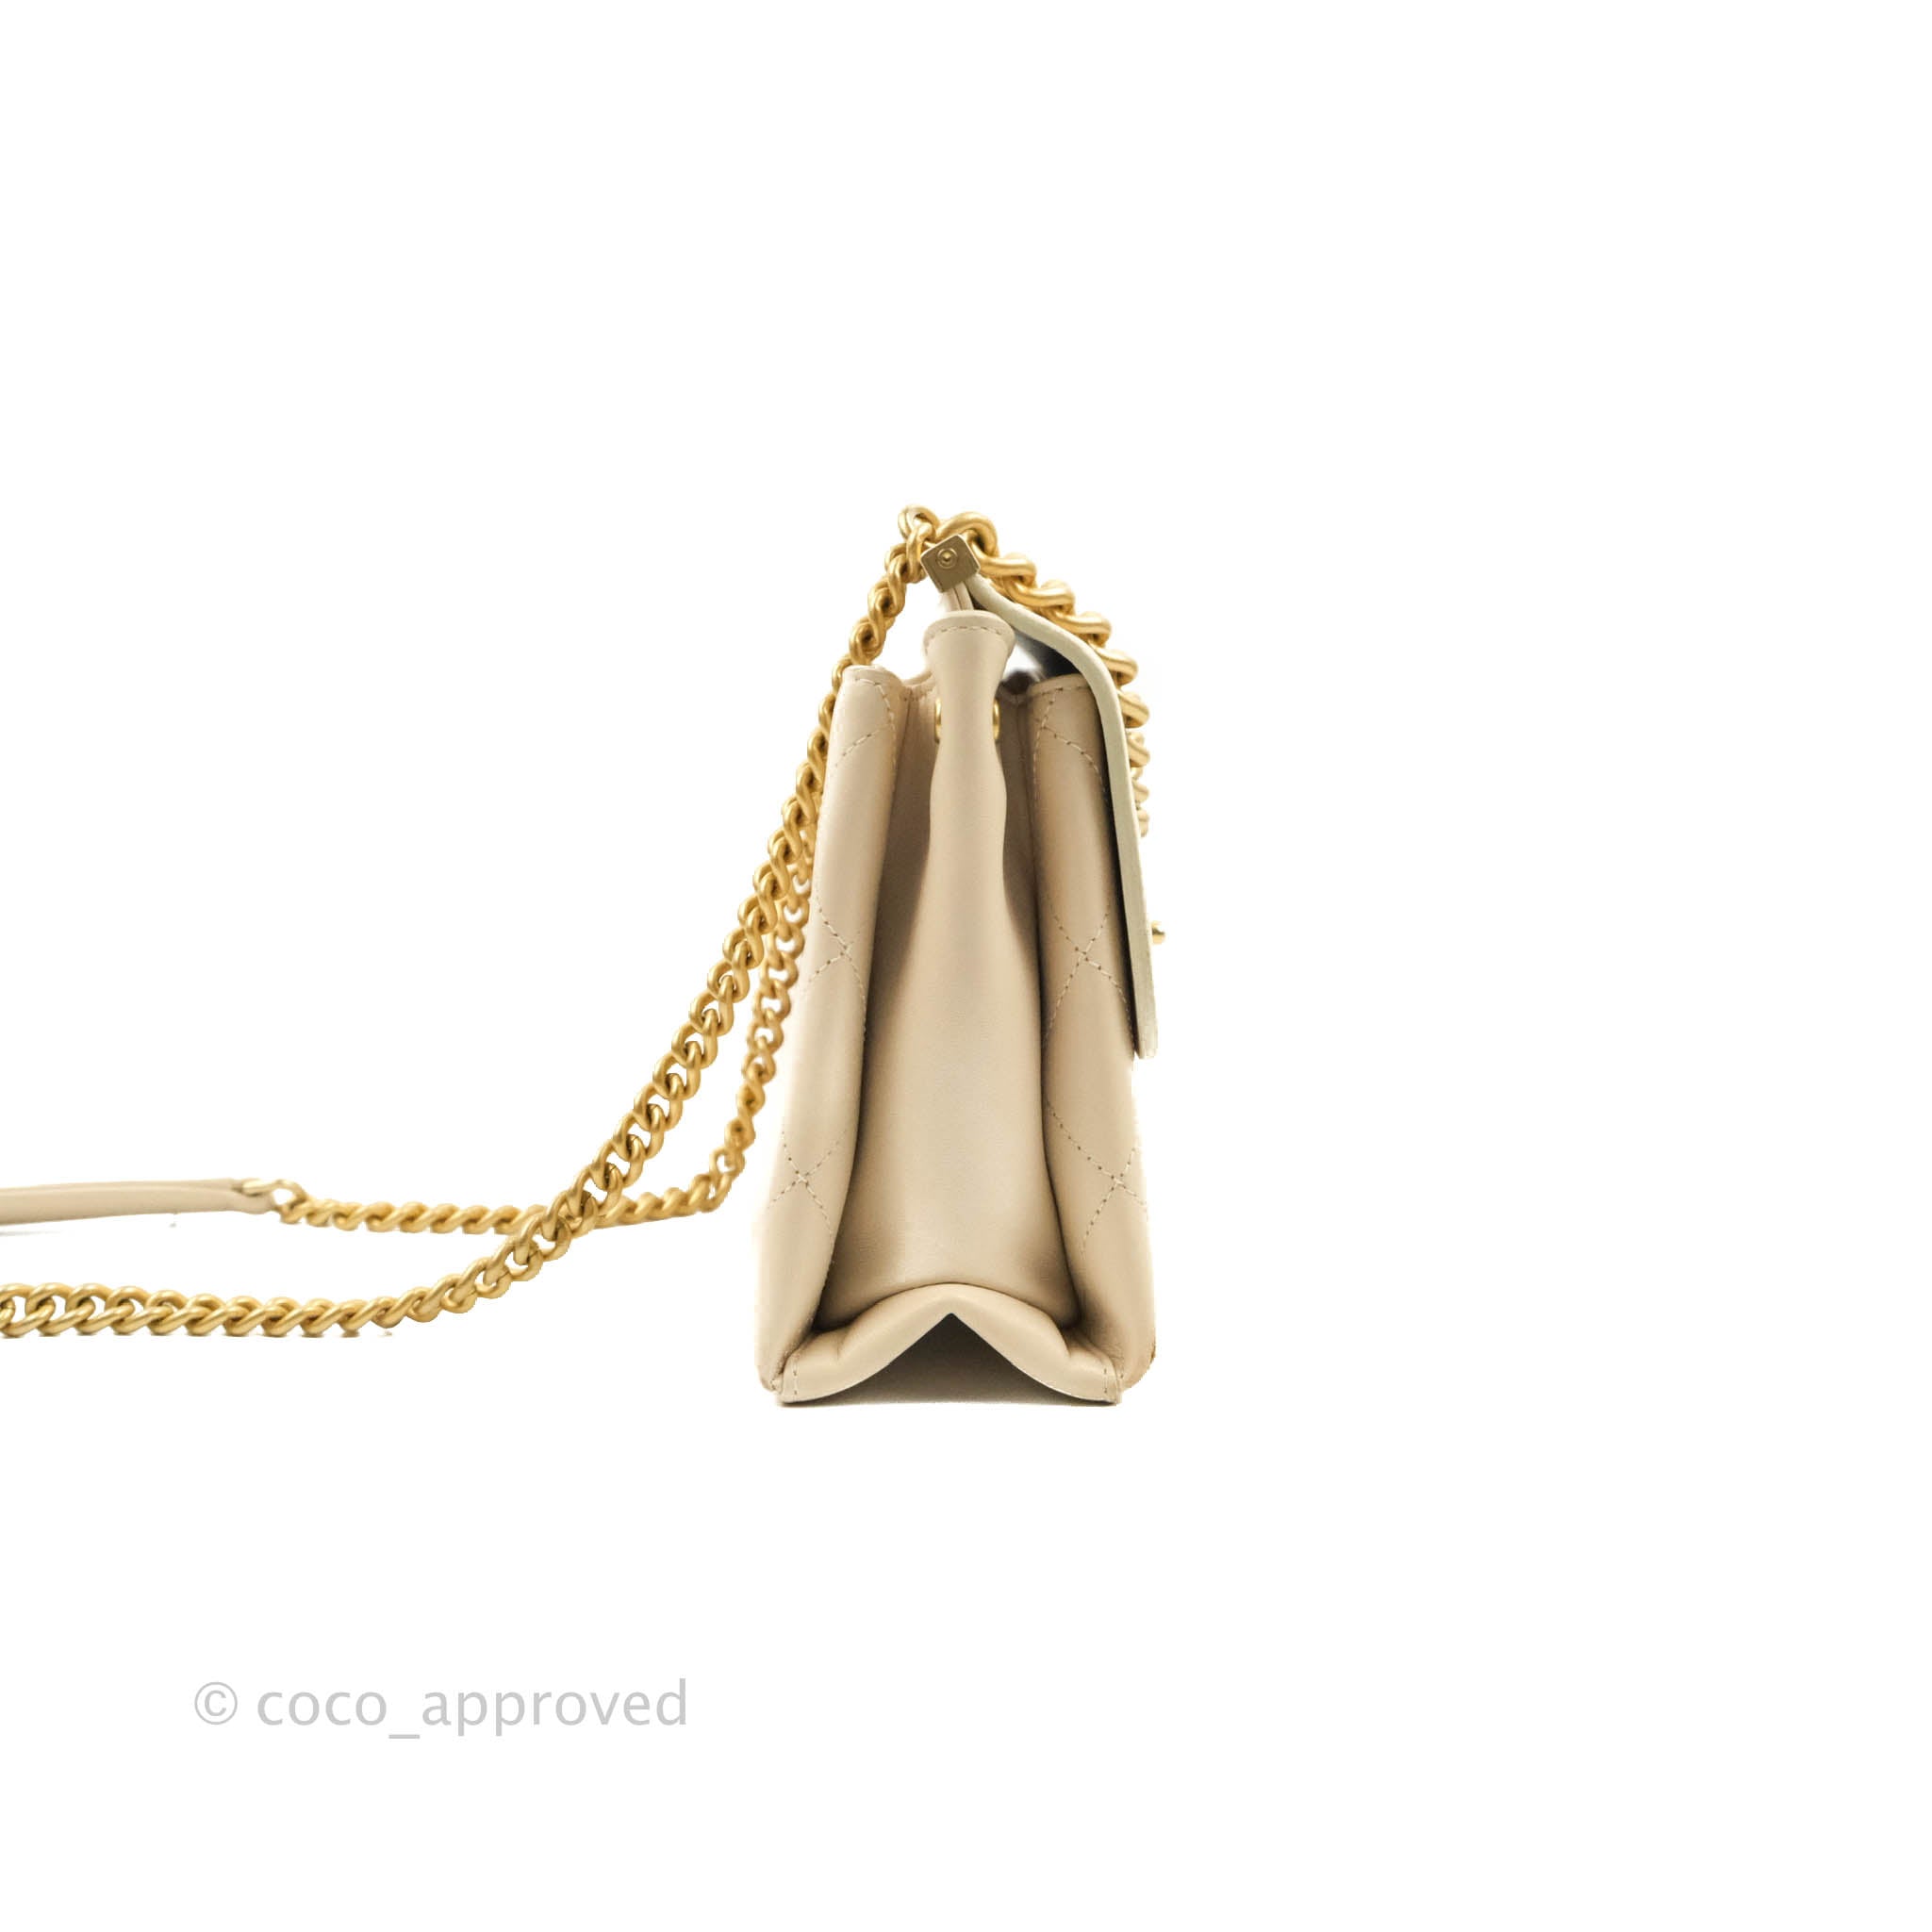 Chanel Paris Dallas Quilted Calfskin Metal Mini Beauty Flap Bag Burgundy -  Luxury In Reach